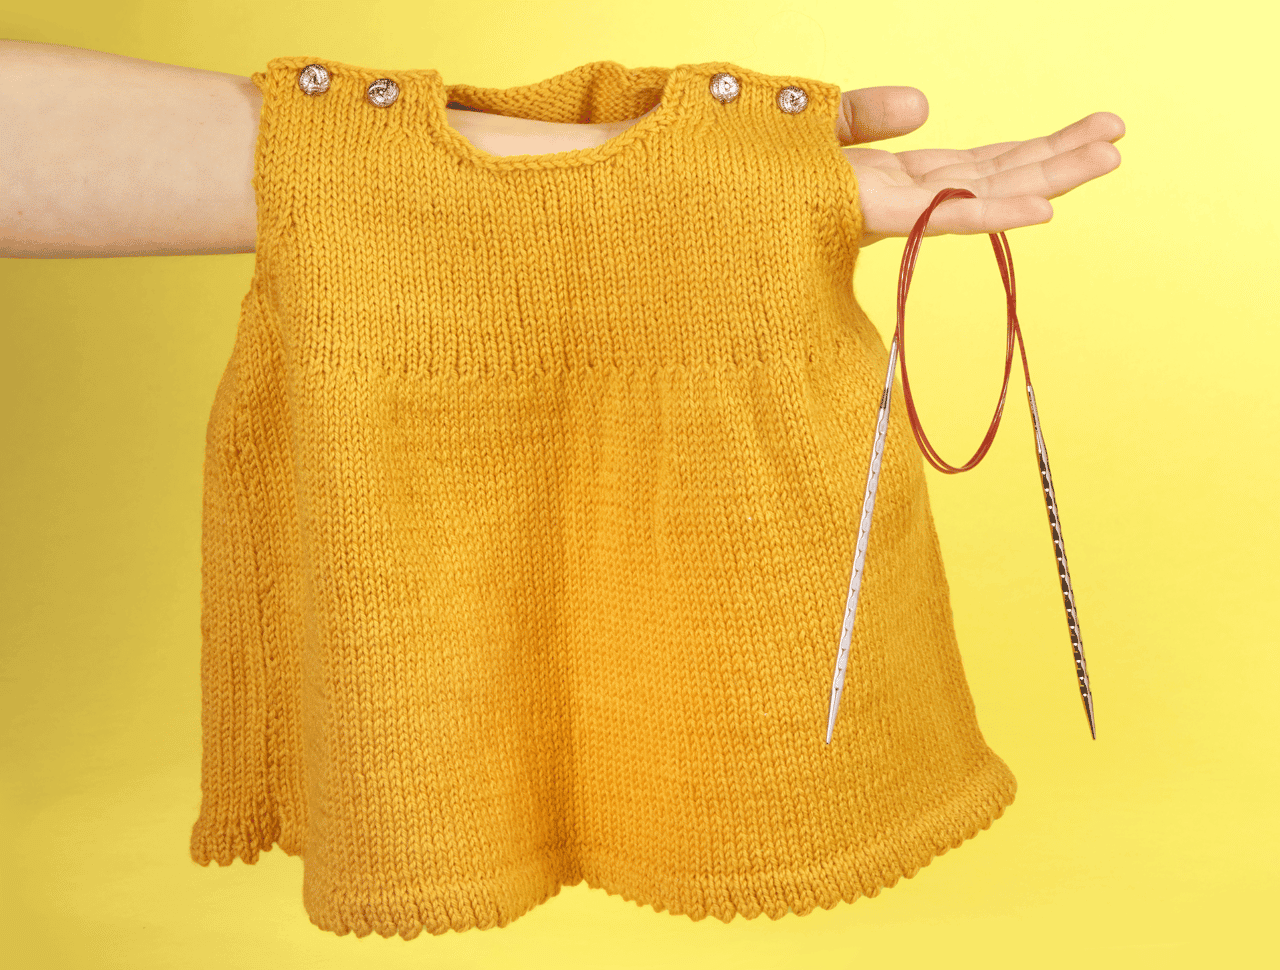 Crochet Ball Baby Line Thick Woolen Handmade Sweater Wool DIY Scarf Home DIY Circular Knitting Needles Interchangeable Circular Knitting Needles Size